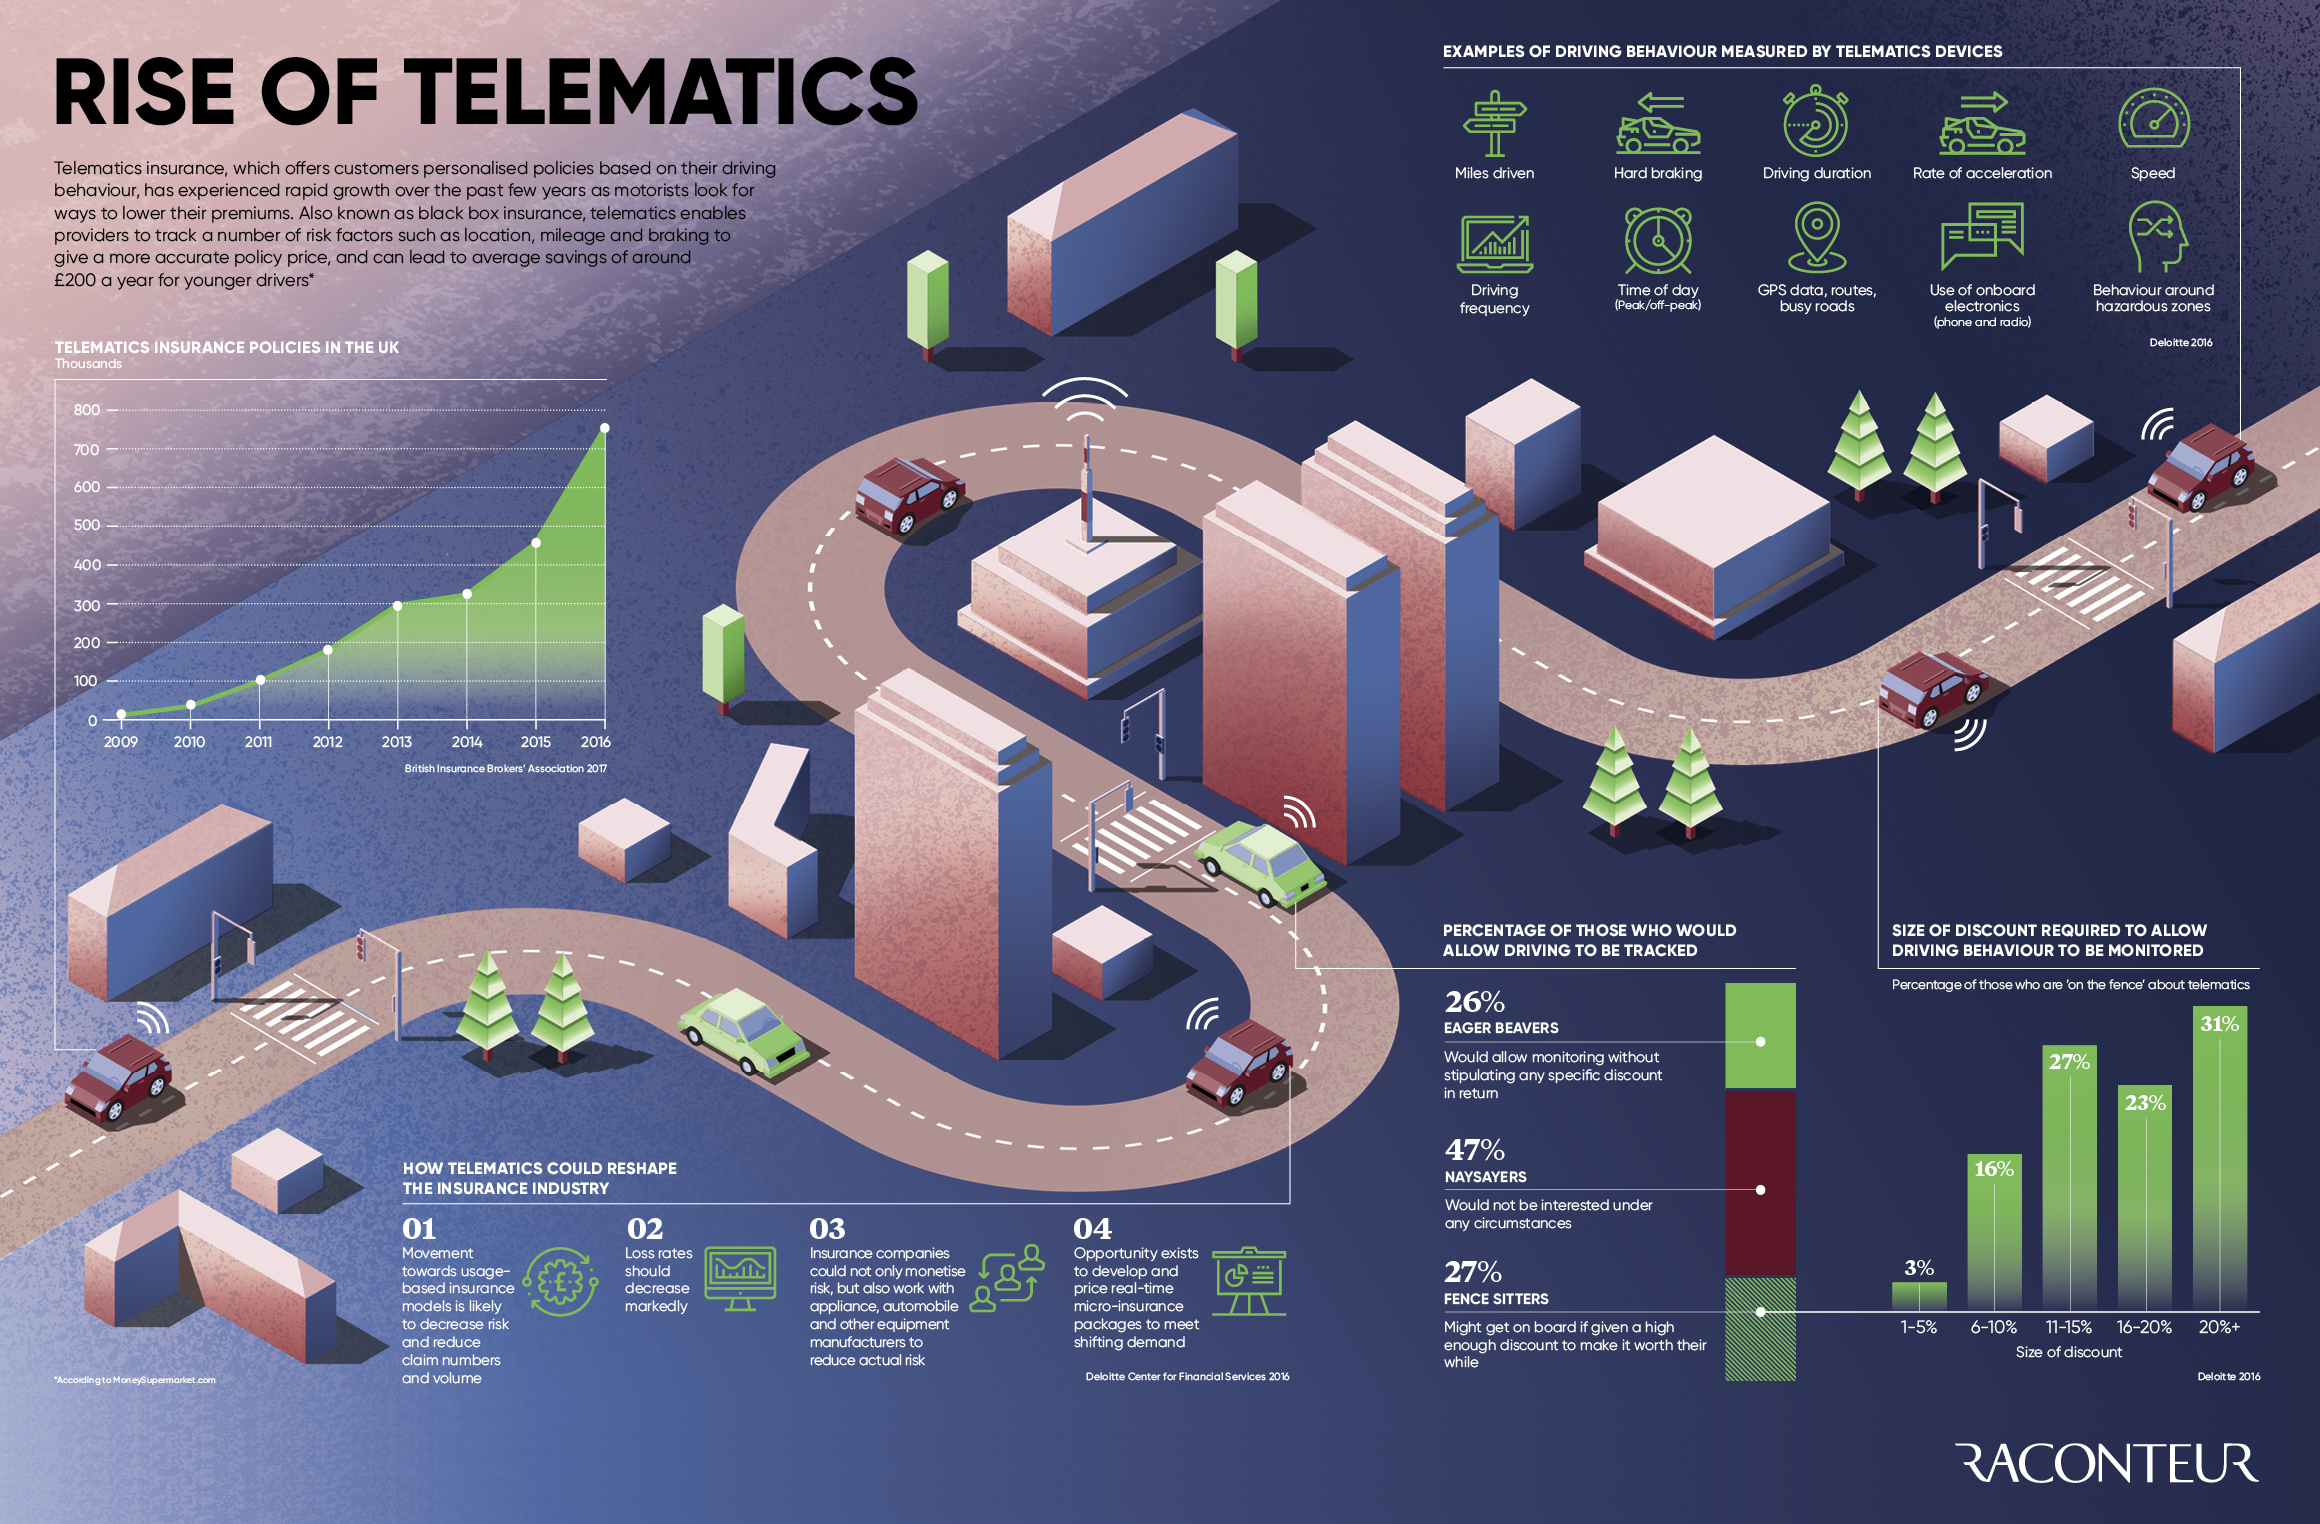 Rise of telematics infographic